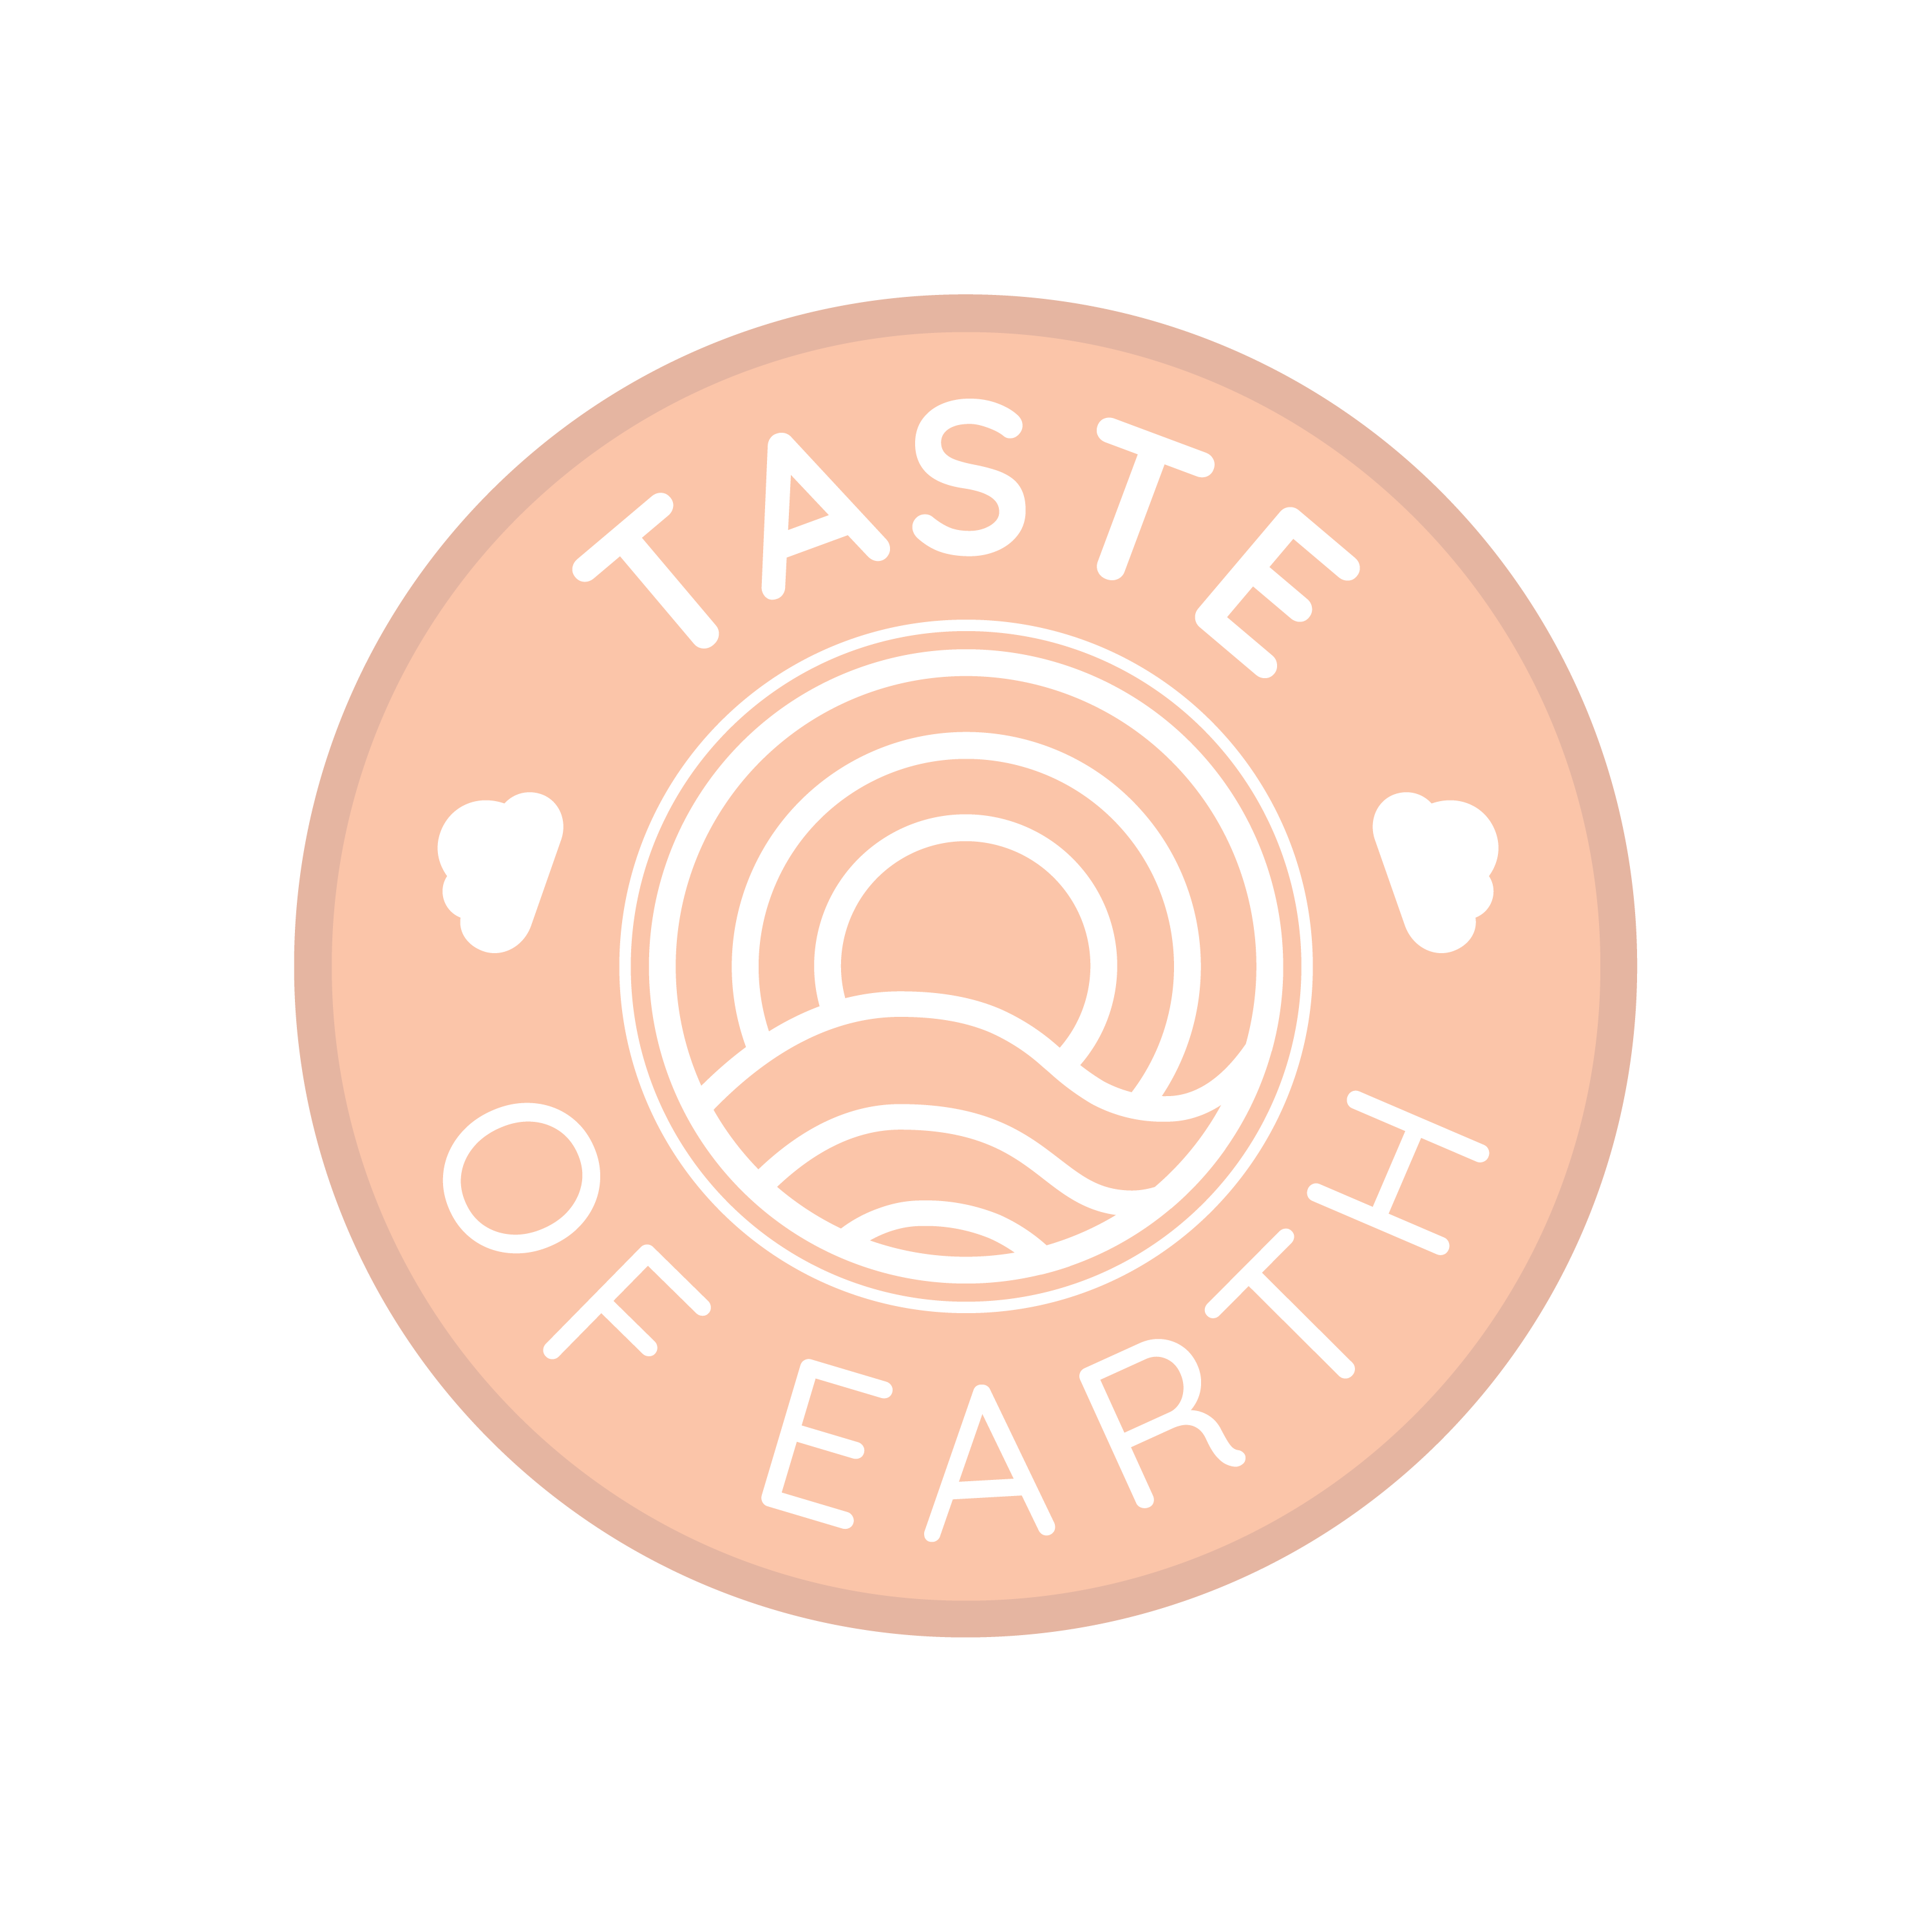 Taste of Earth Dispensary